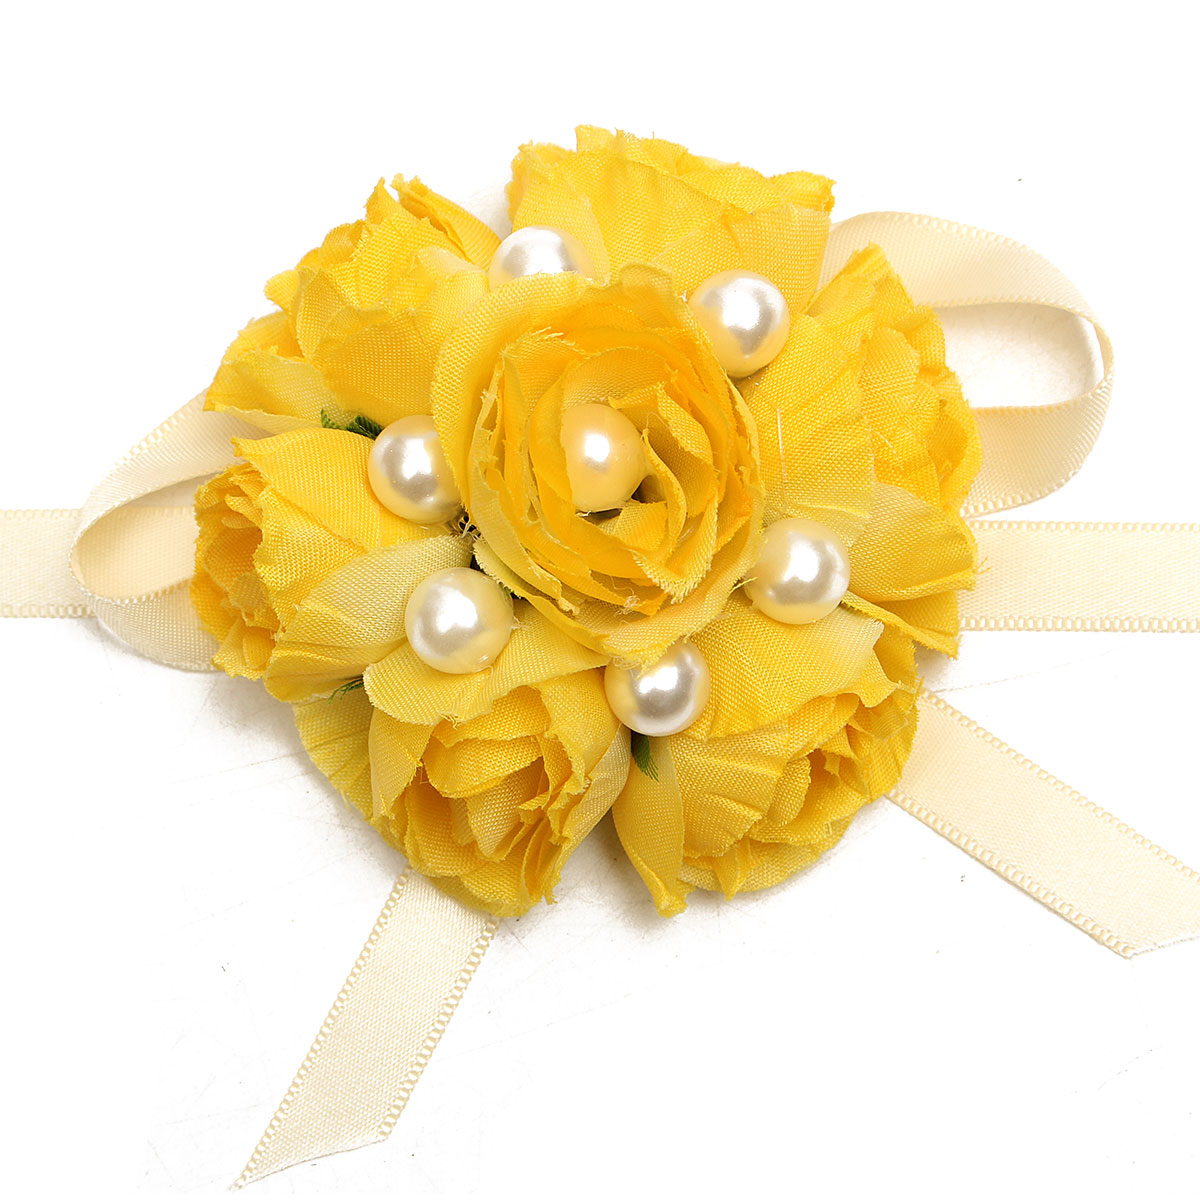 Bridemaid-Silk-Rose-Flower-Pearl-Bracelet-Wrist-Corsage-Wedding-Party-Bridal-Accessories-1047592